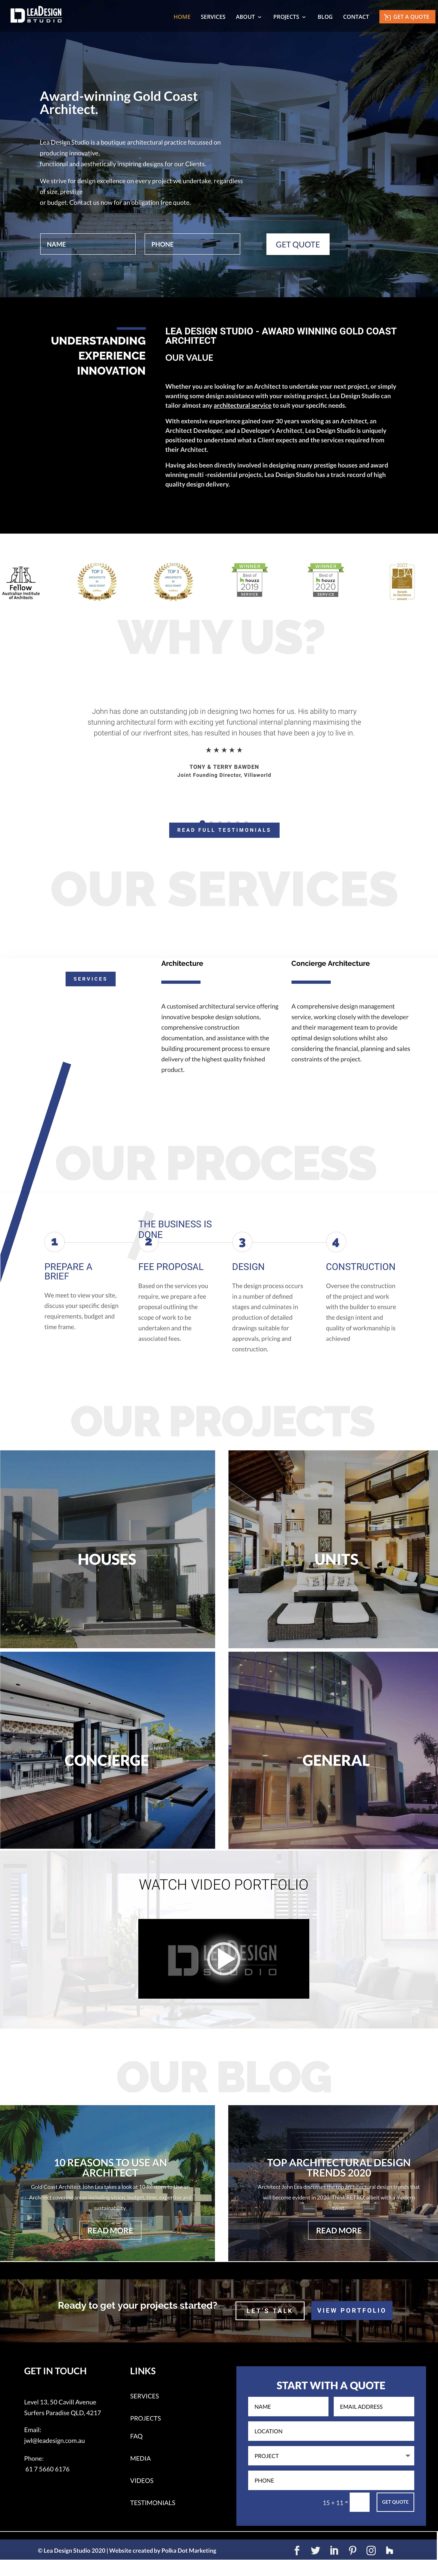 lea design studio web page